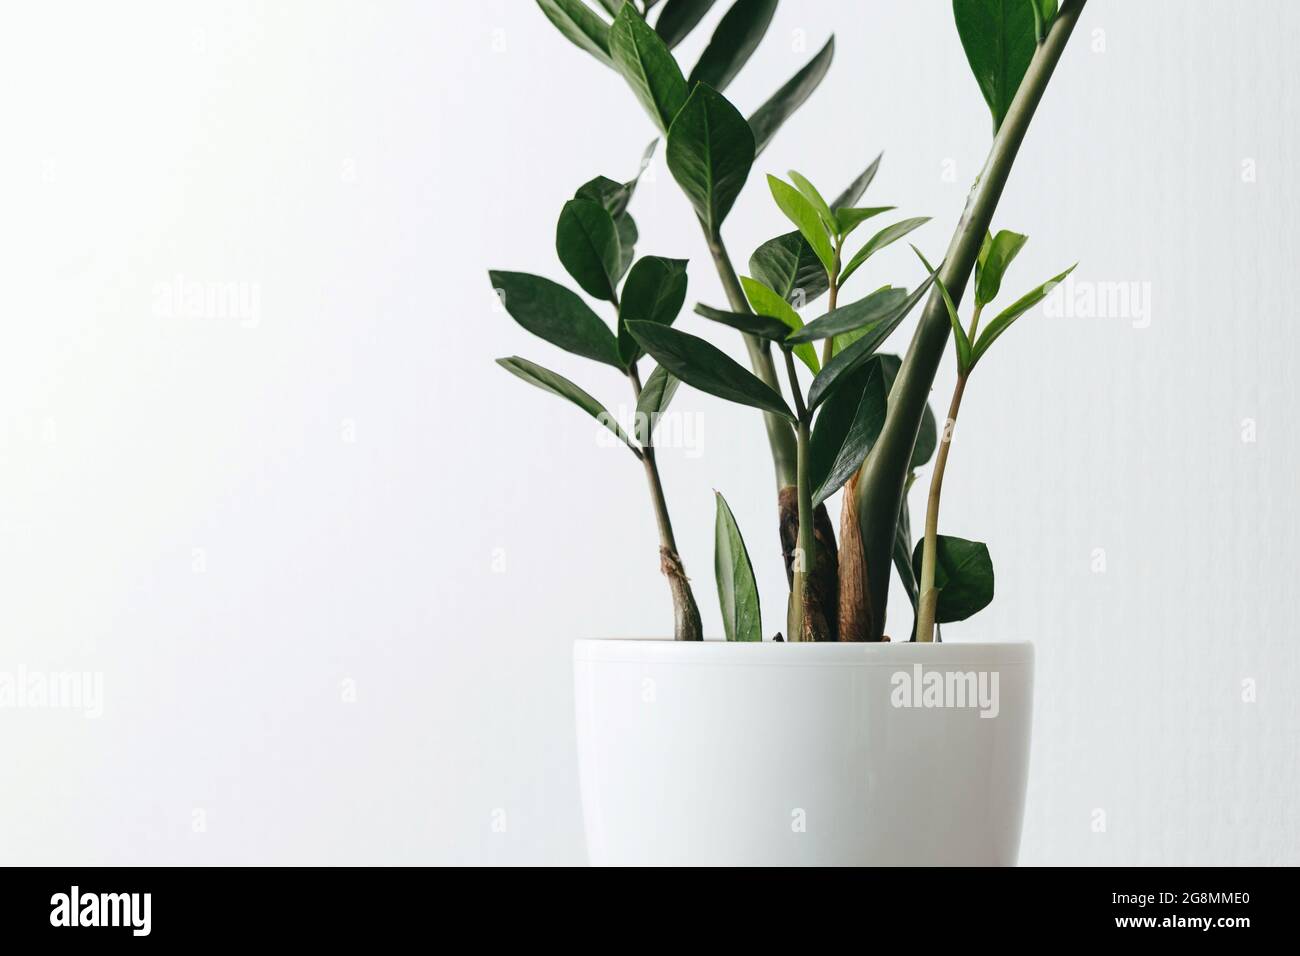 Zamioculcas zamiifolia zz grüne Pflanze Blatt auf dem weißen Hintergrund close up Stockfoto